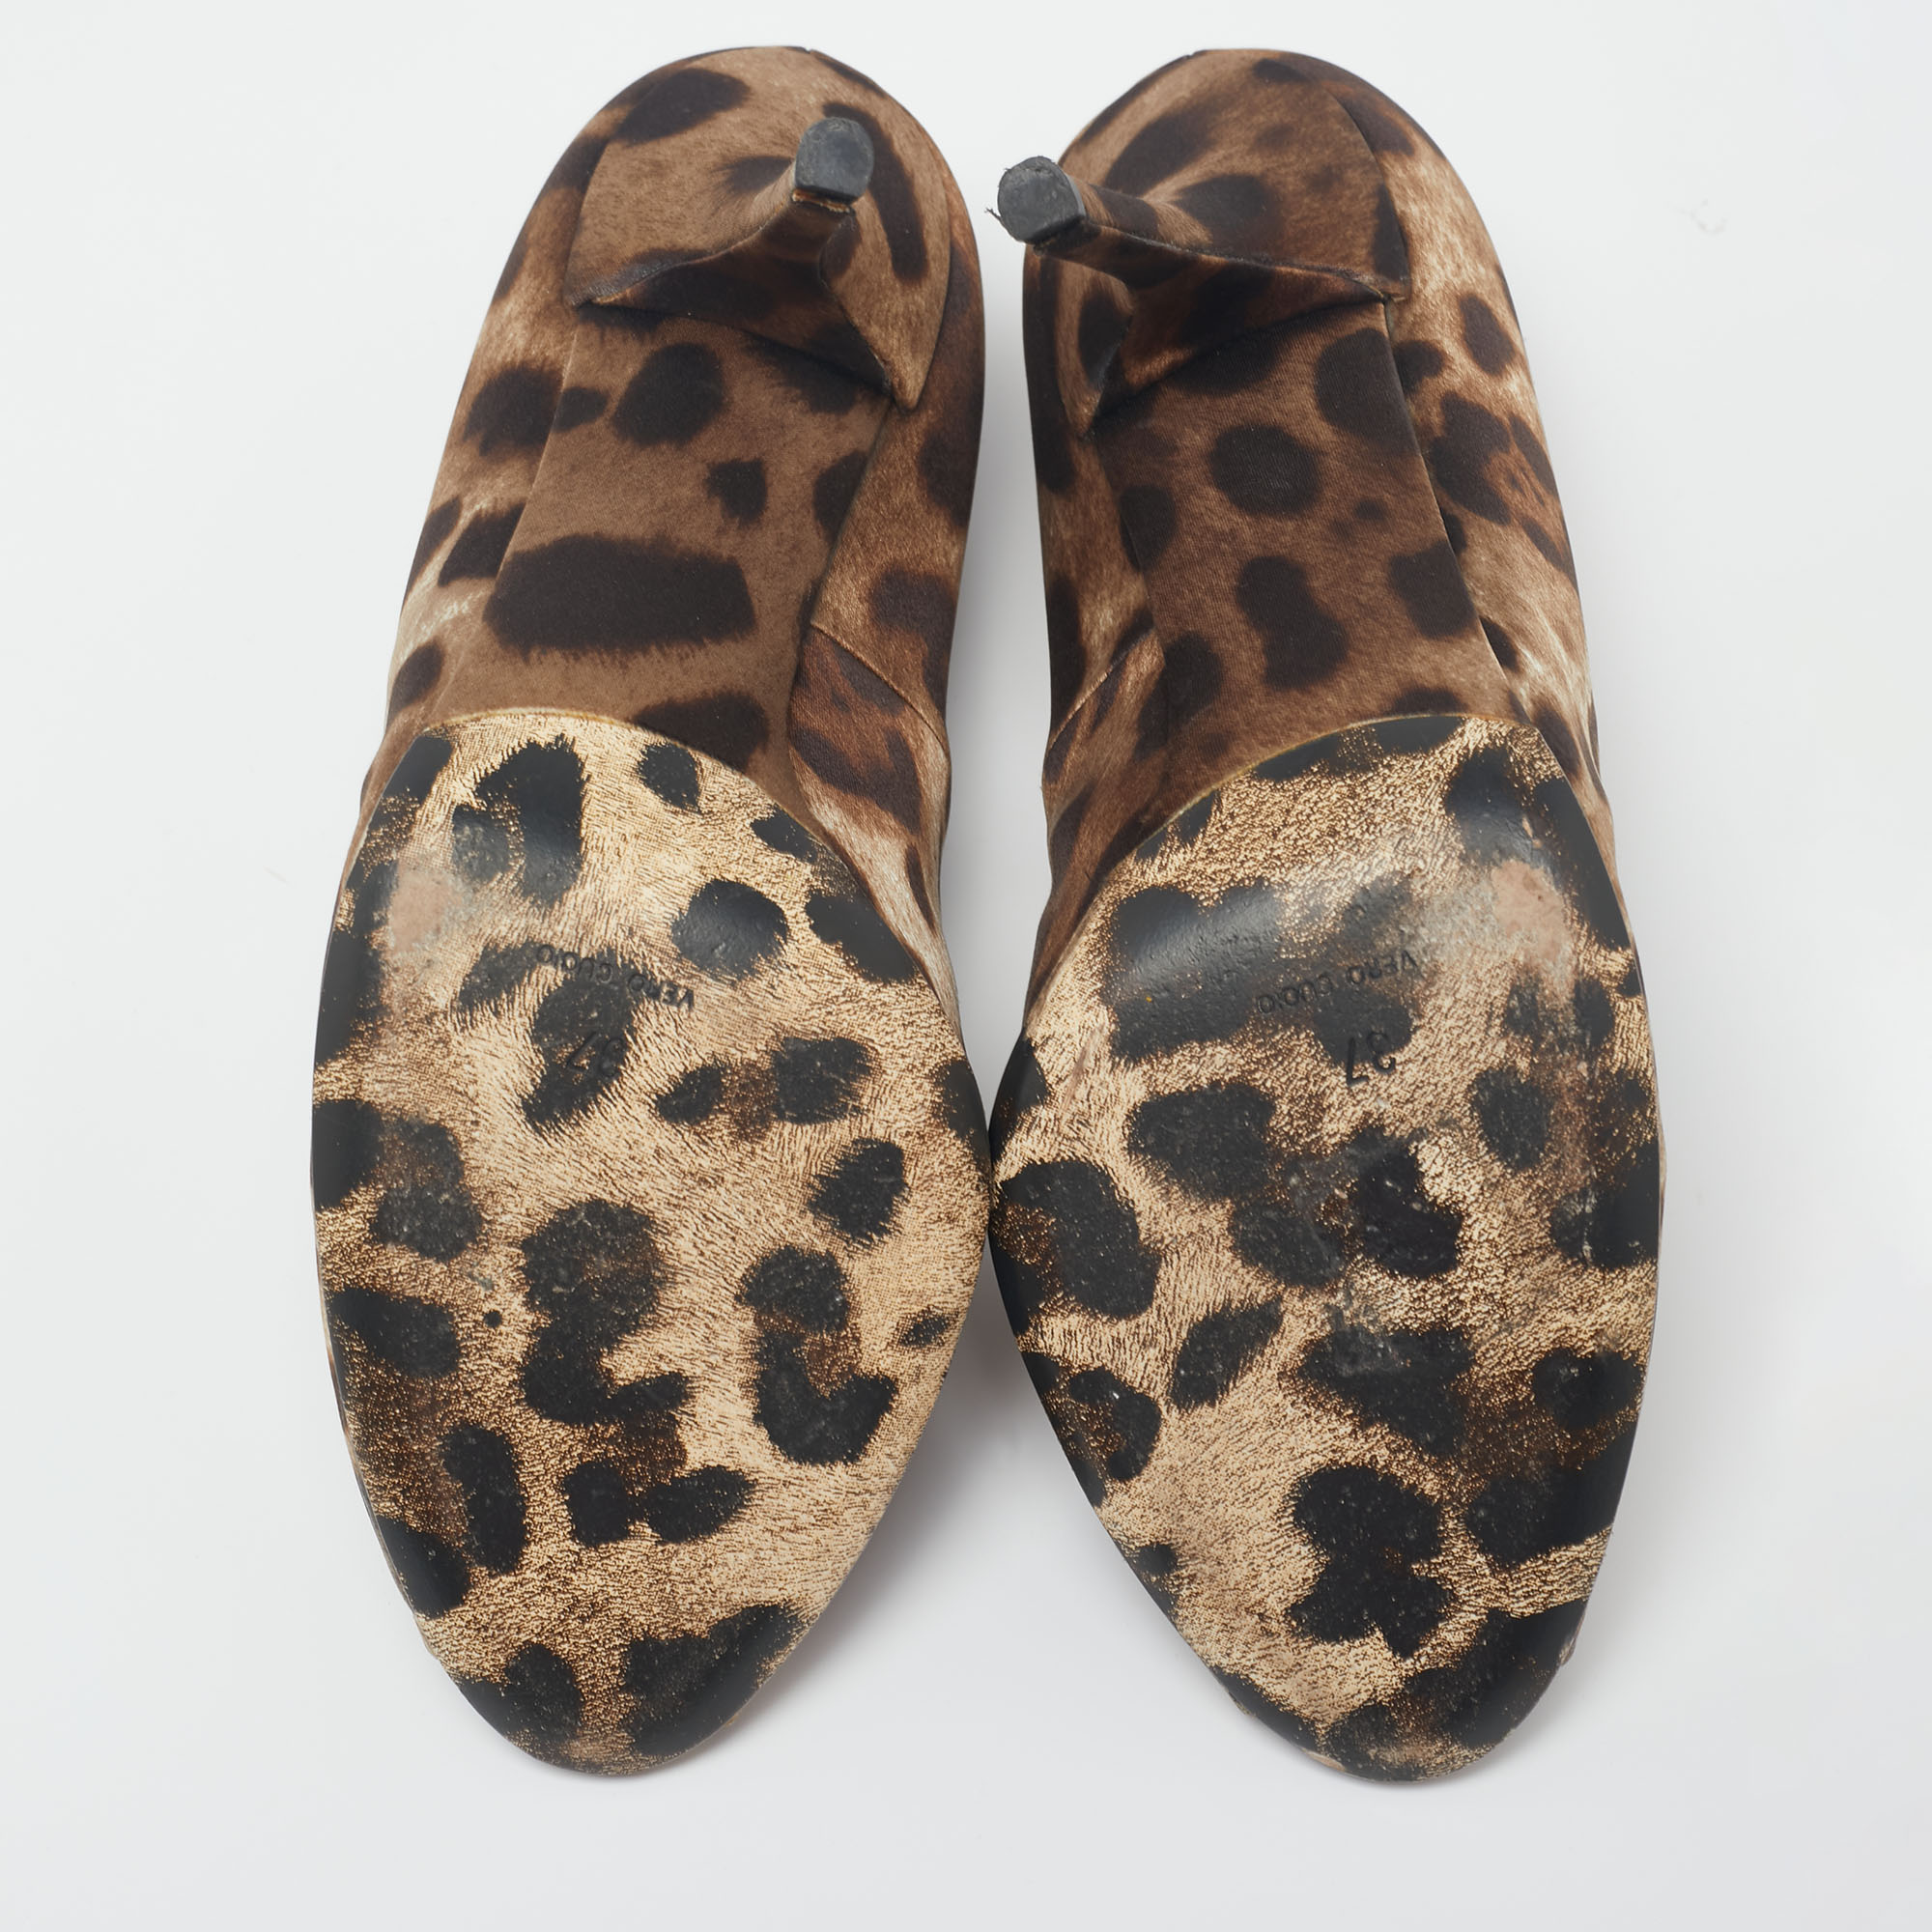 Dolce & Gabbana Brown Leopard Print Satin Peep Toe Pump Size 37